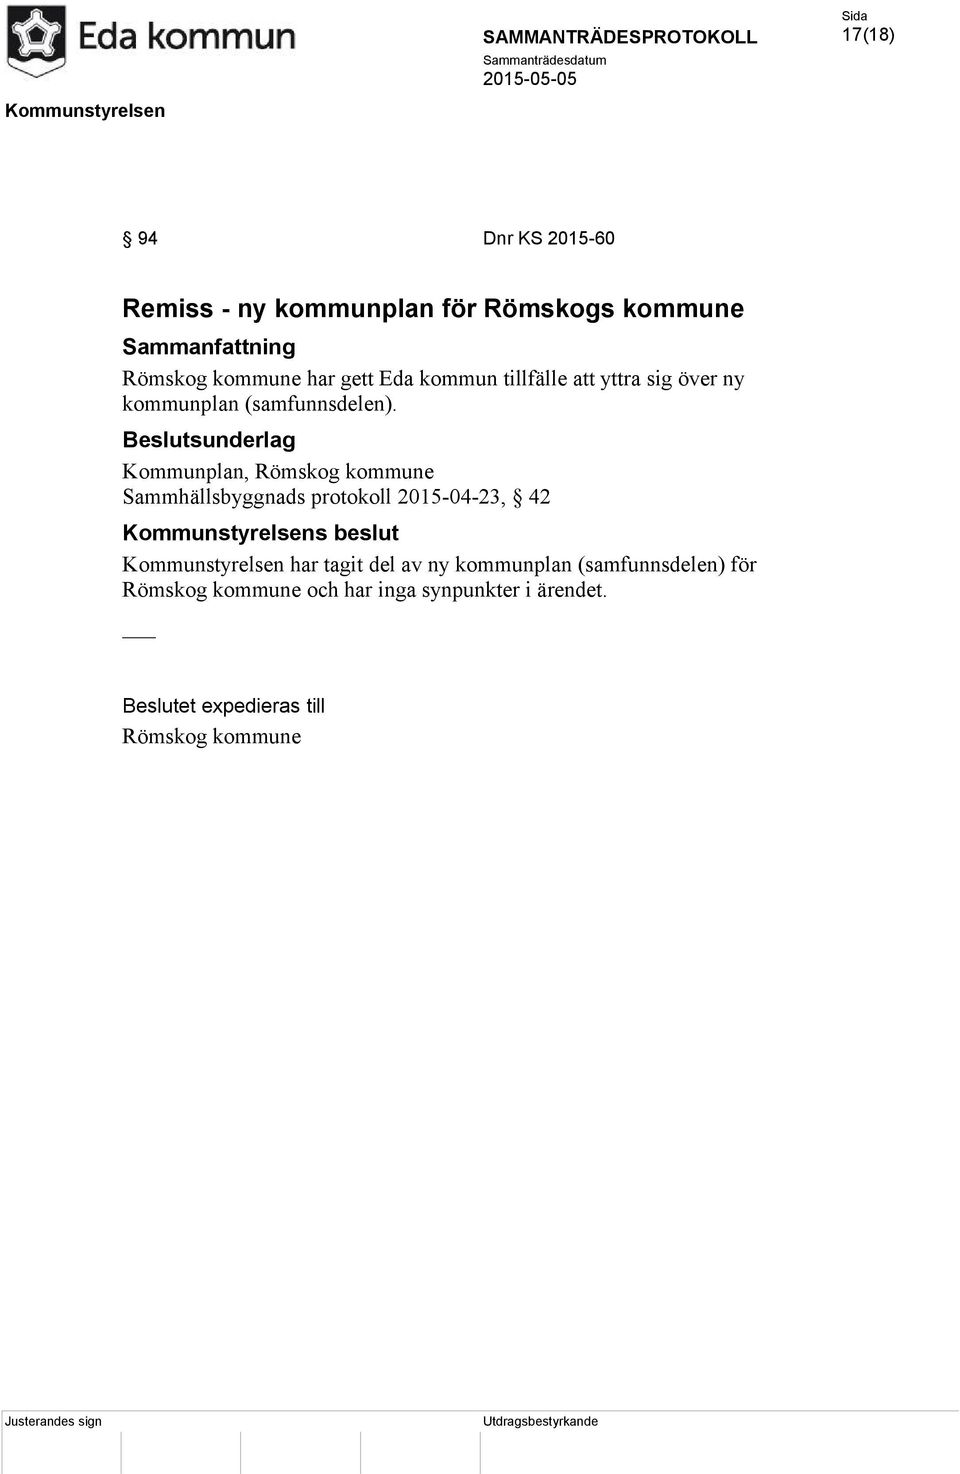 Kommunplan, Römskog kommune Sammhällsbyggnads protokoll 2015-04-23, 42 Kommunstyrelsens beslut